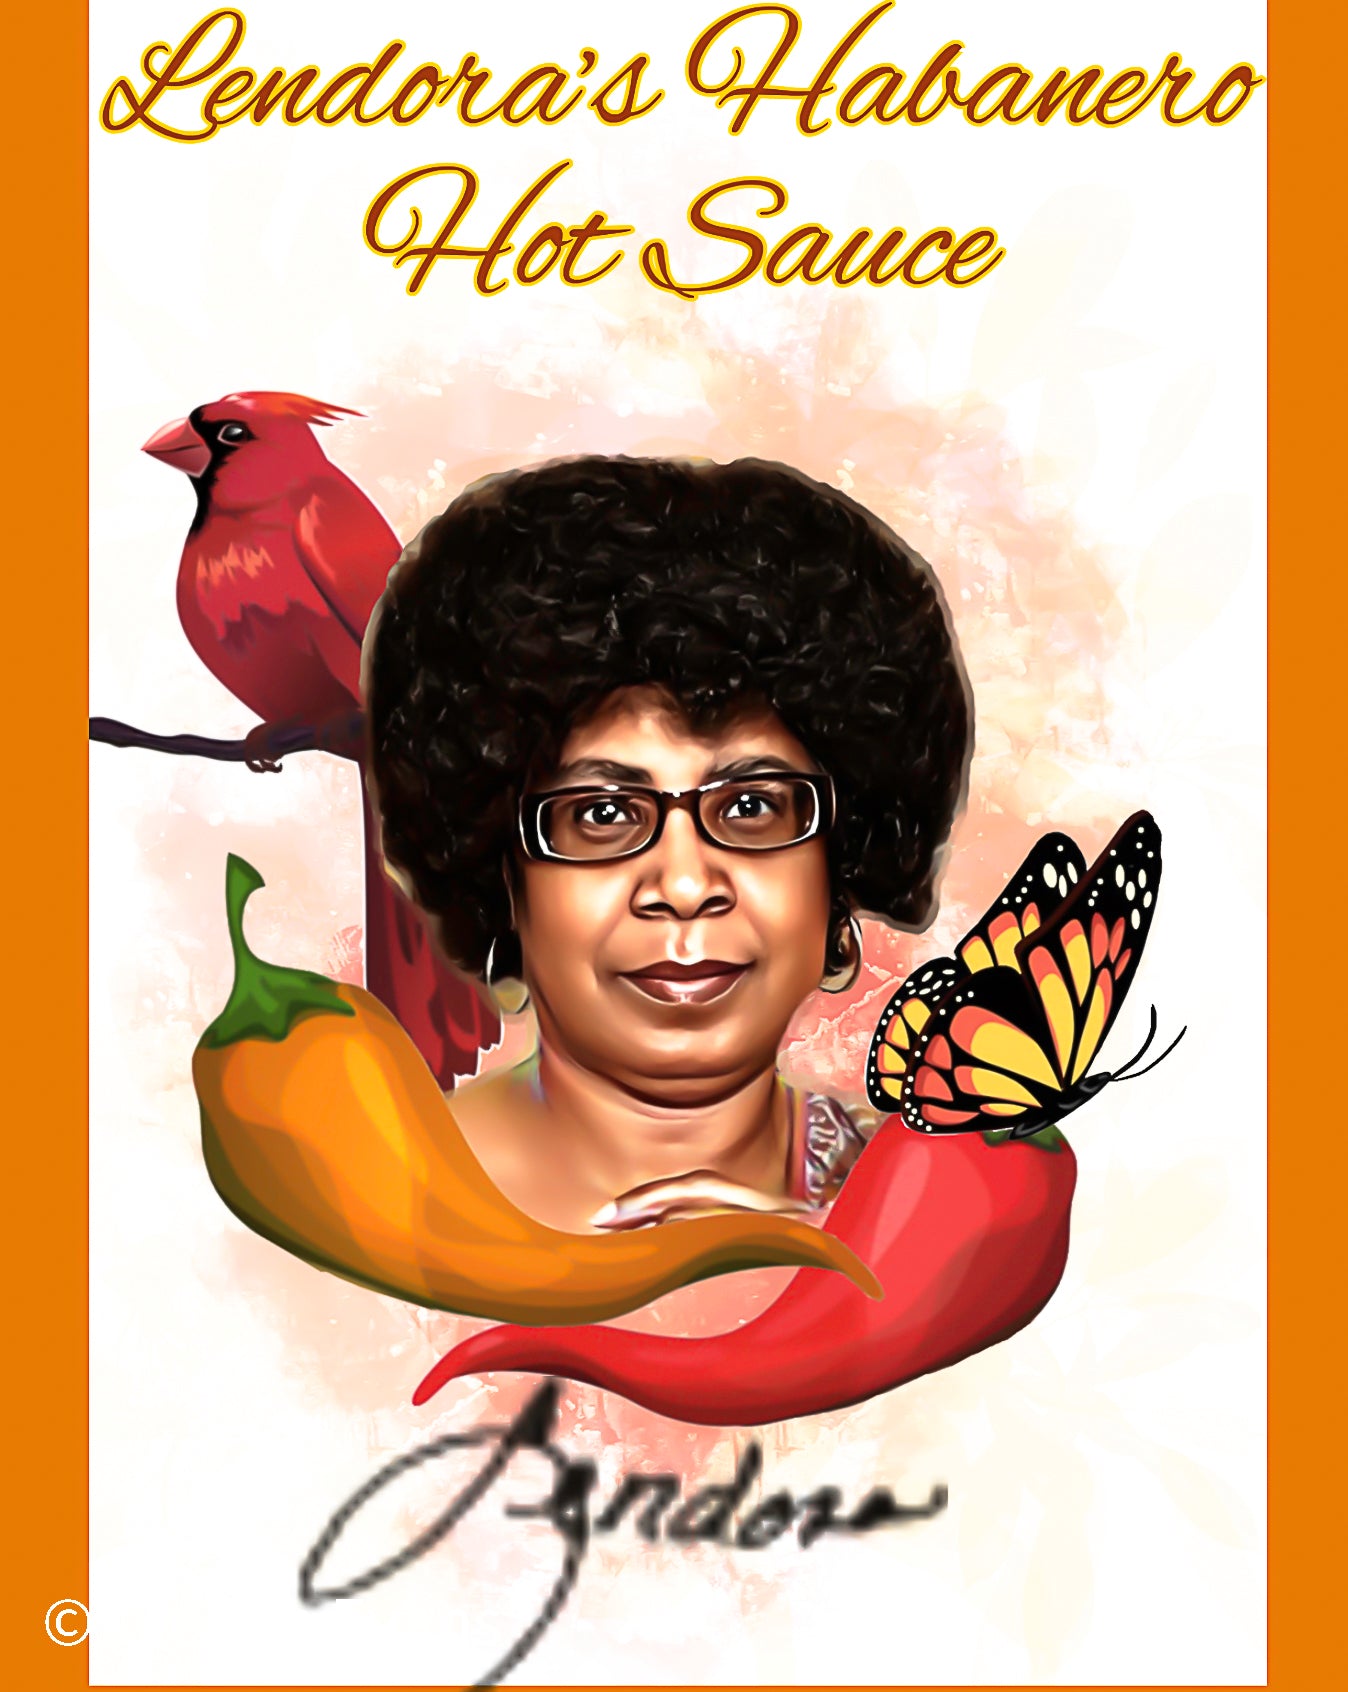 Lendora's Habenero Hot Sauce